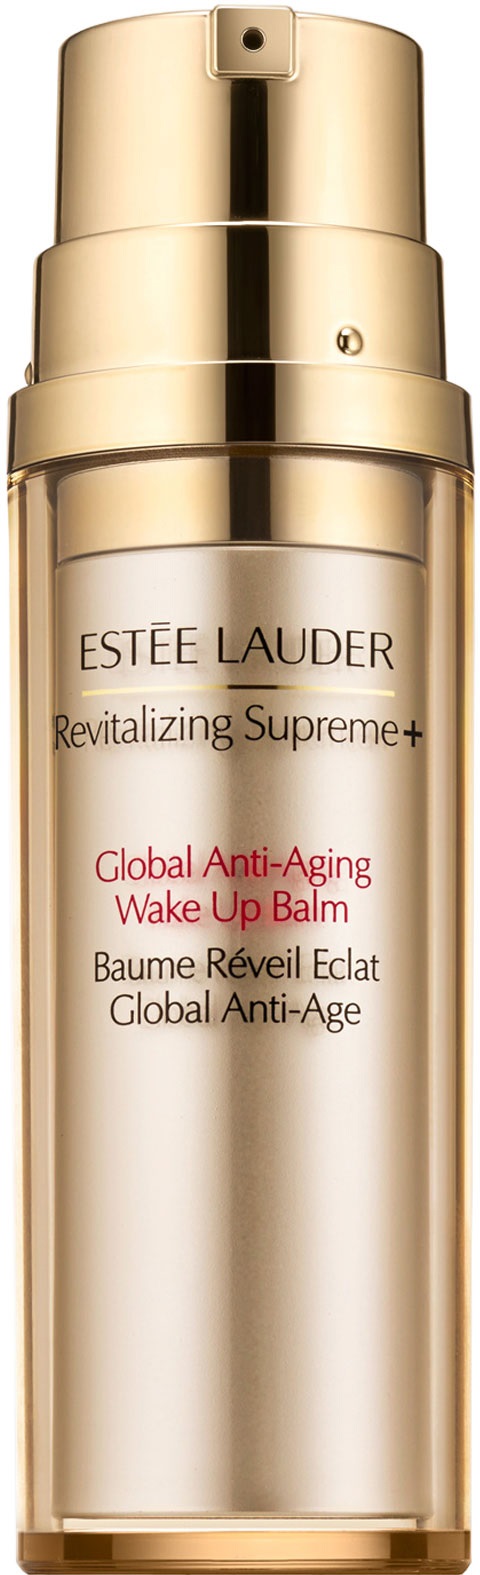 estee lauder revitalizing supreme global anti aging wake up balm